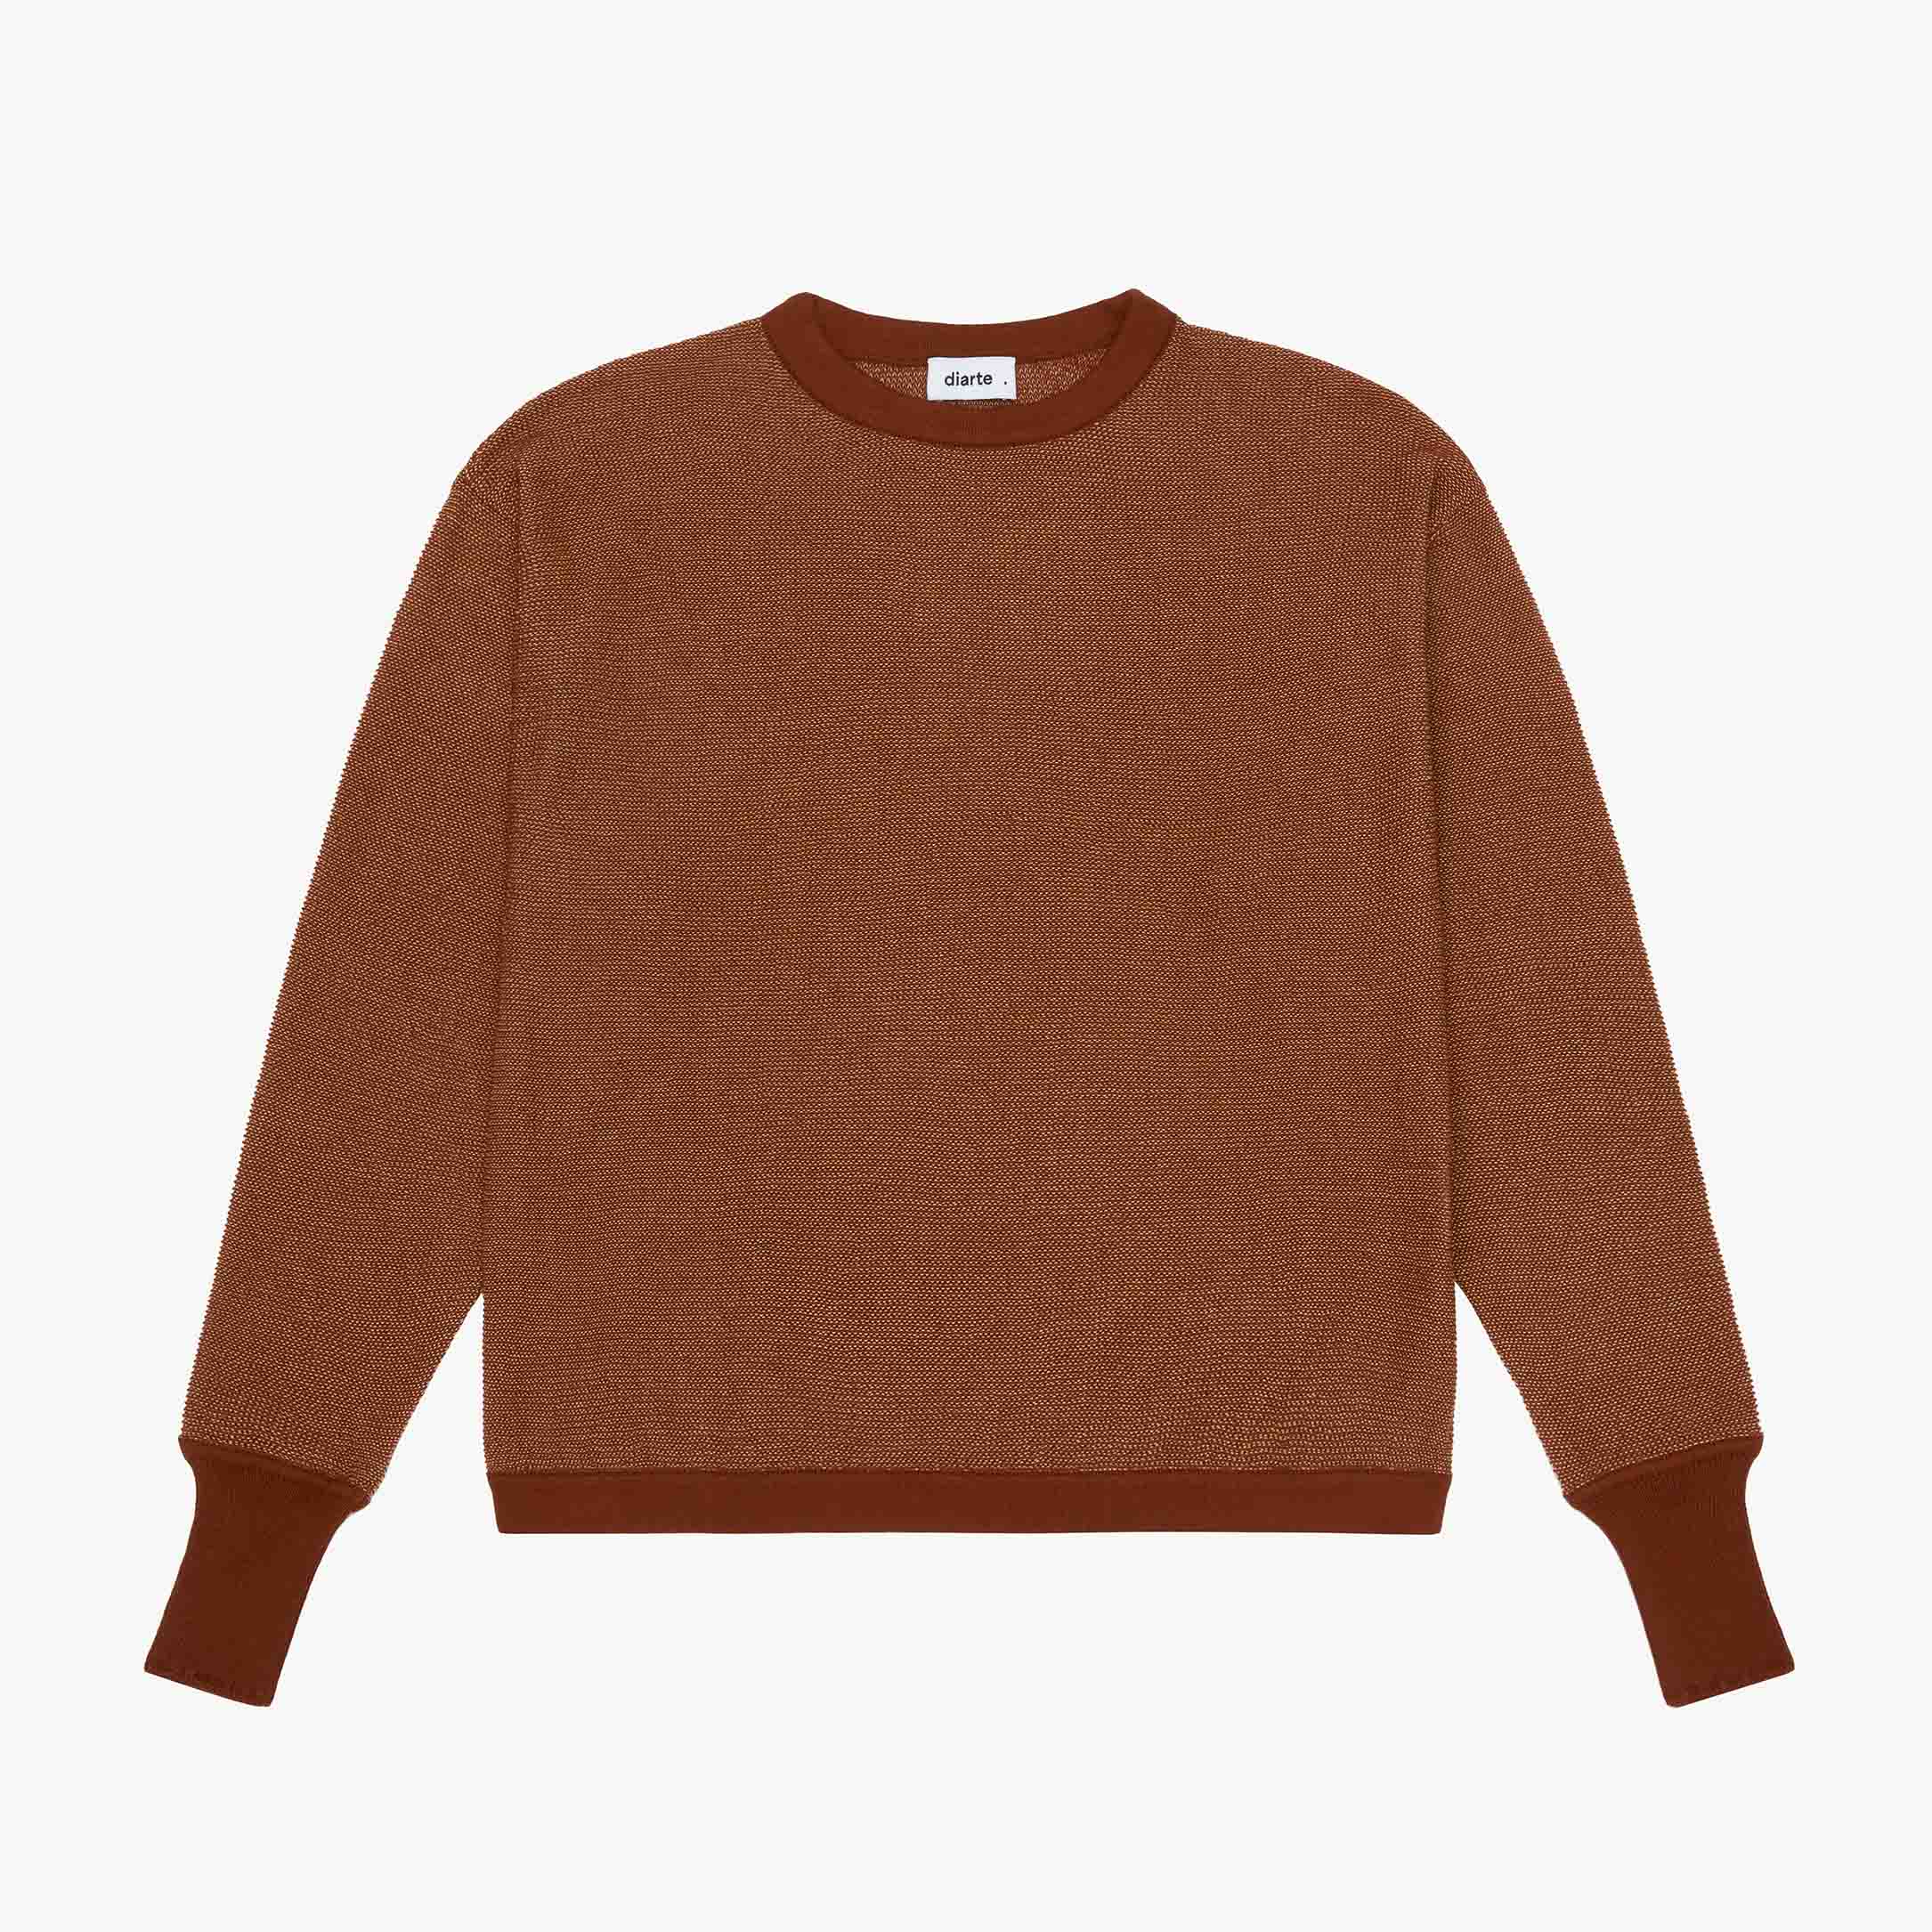 Diarte Brick Omega Cotton Sweater